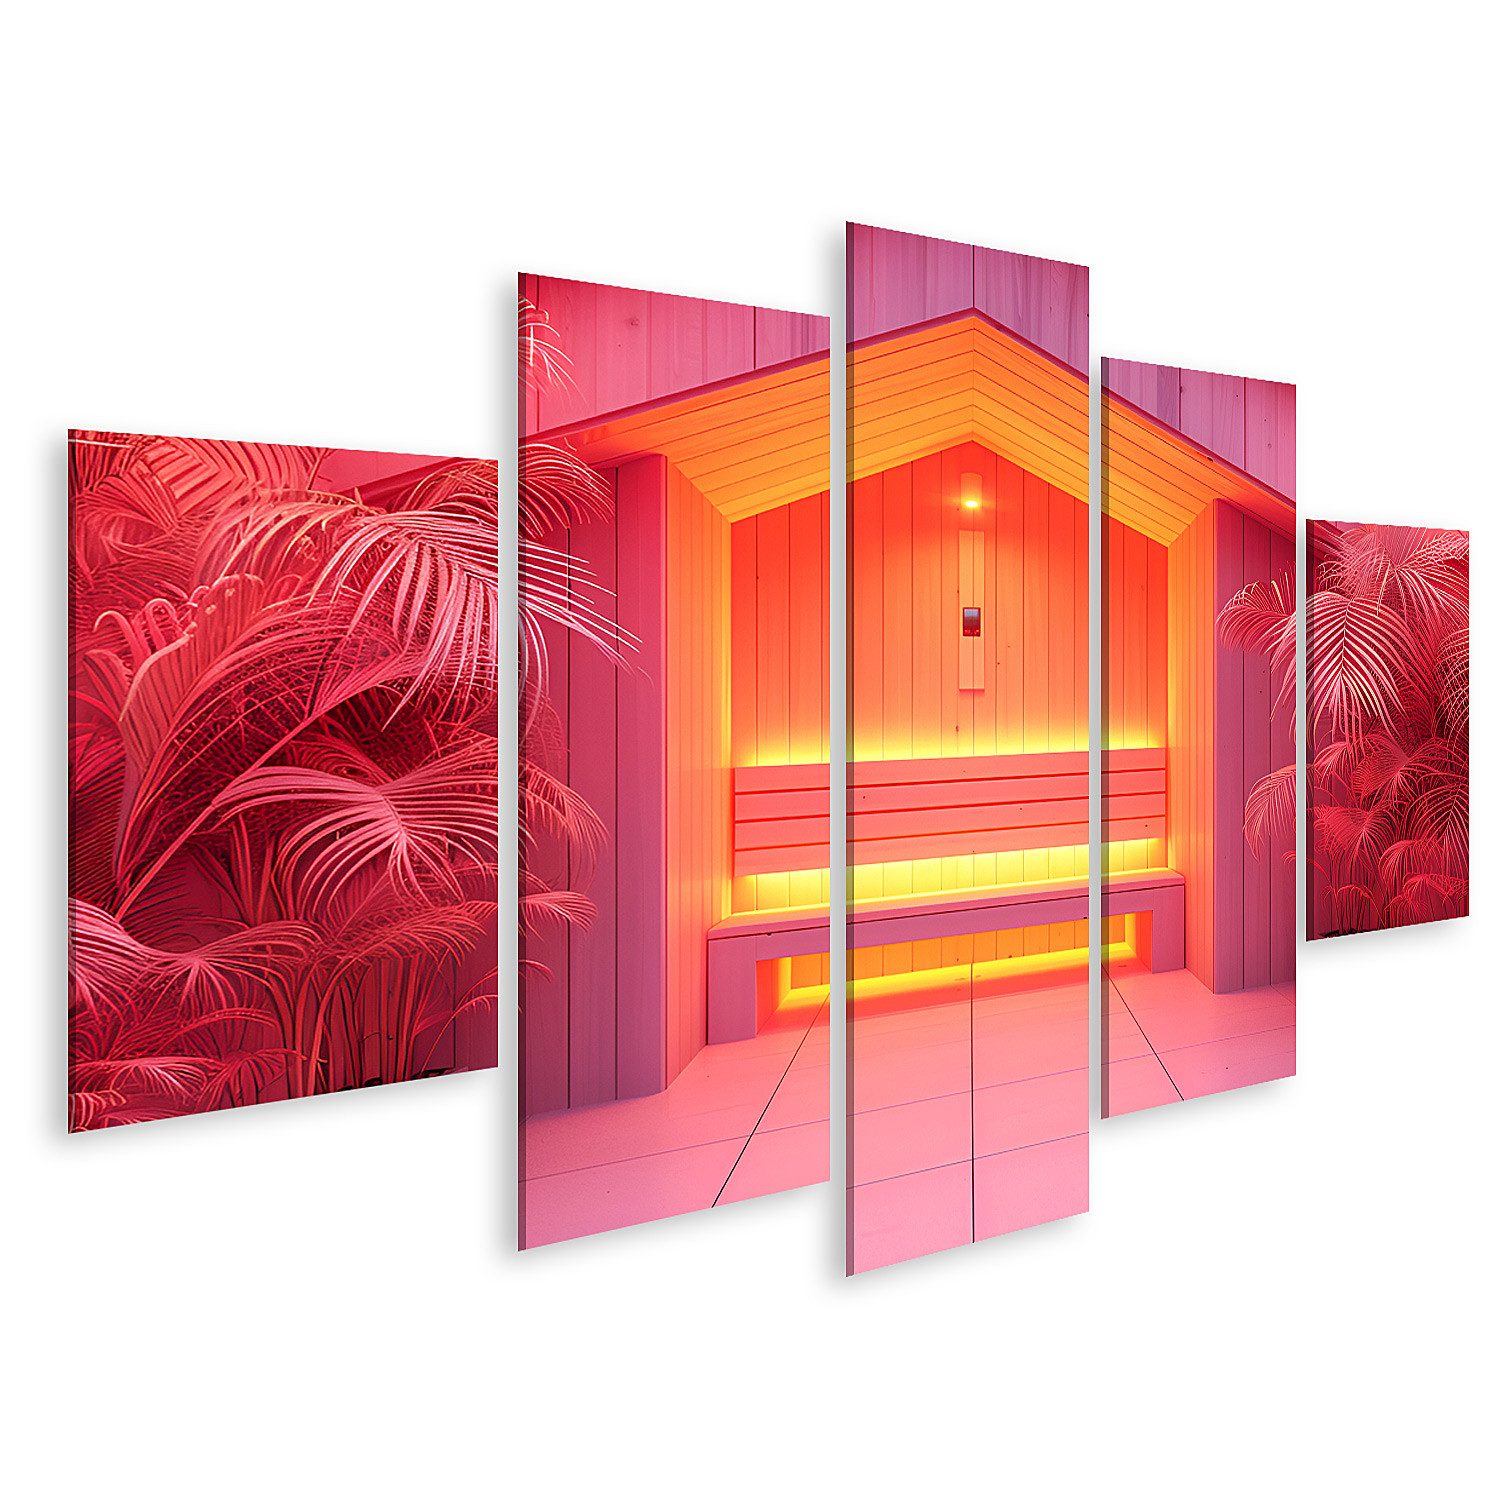 islandburner Leinwandbild Innenraumdesign: Technologisches Infrarot-Sauna-Spa-Konzept Wandbild W